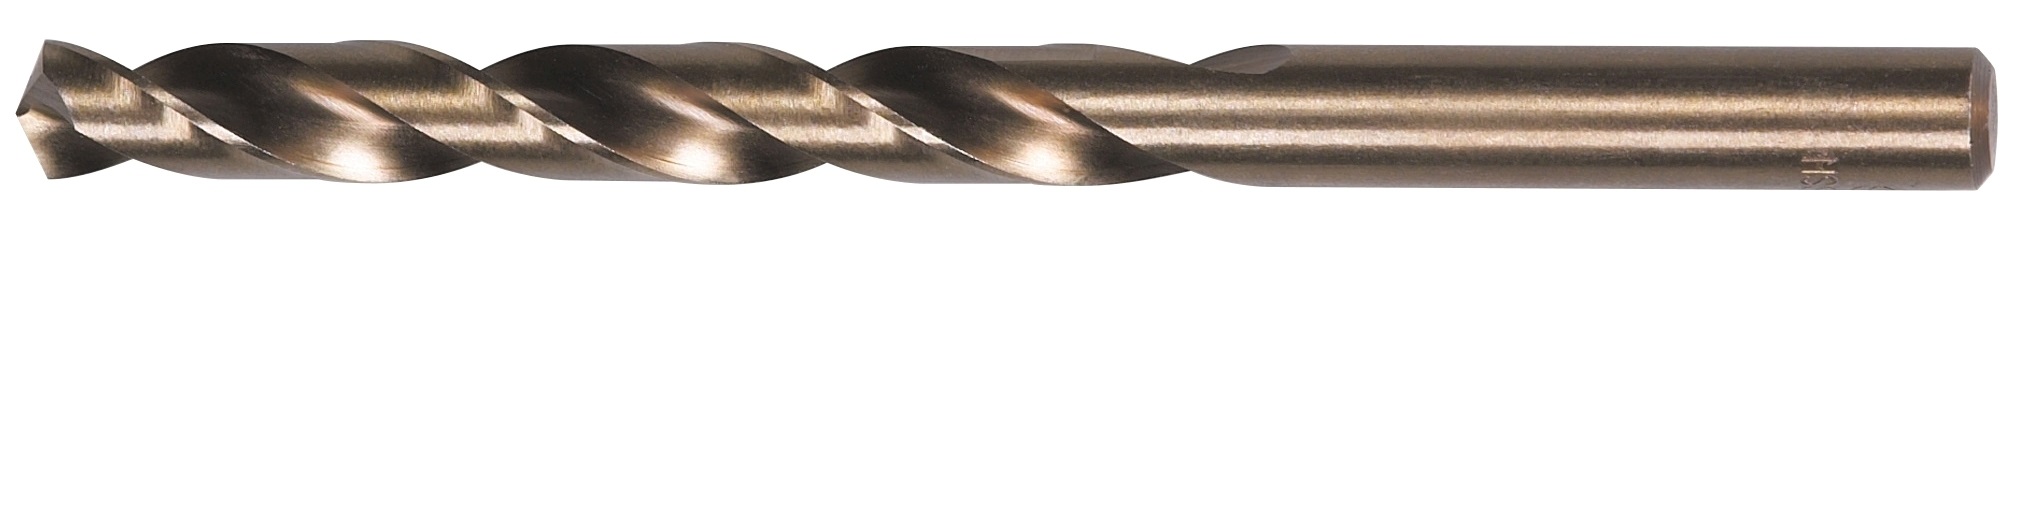 Häfele Metall Spiralbohrer HSS 6,0 mm 